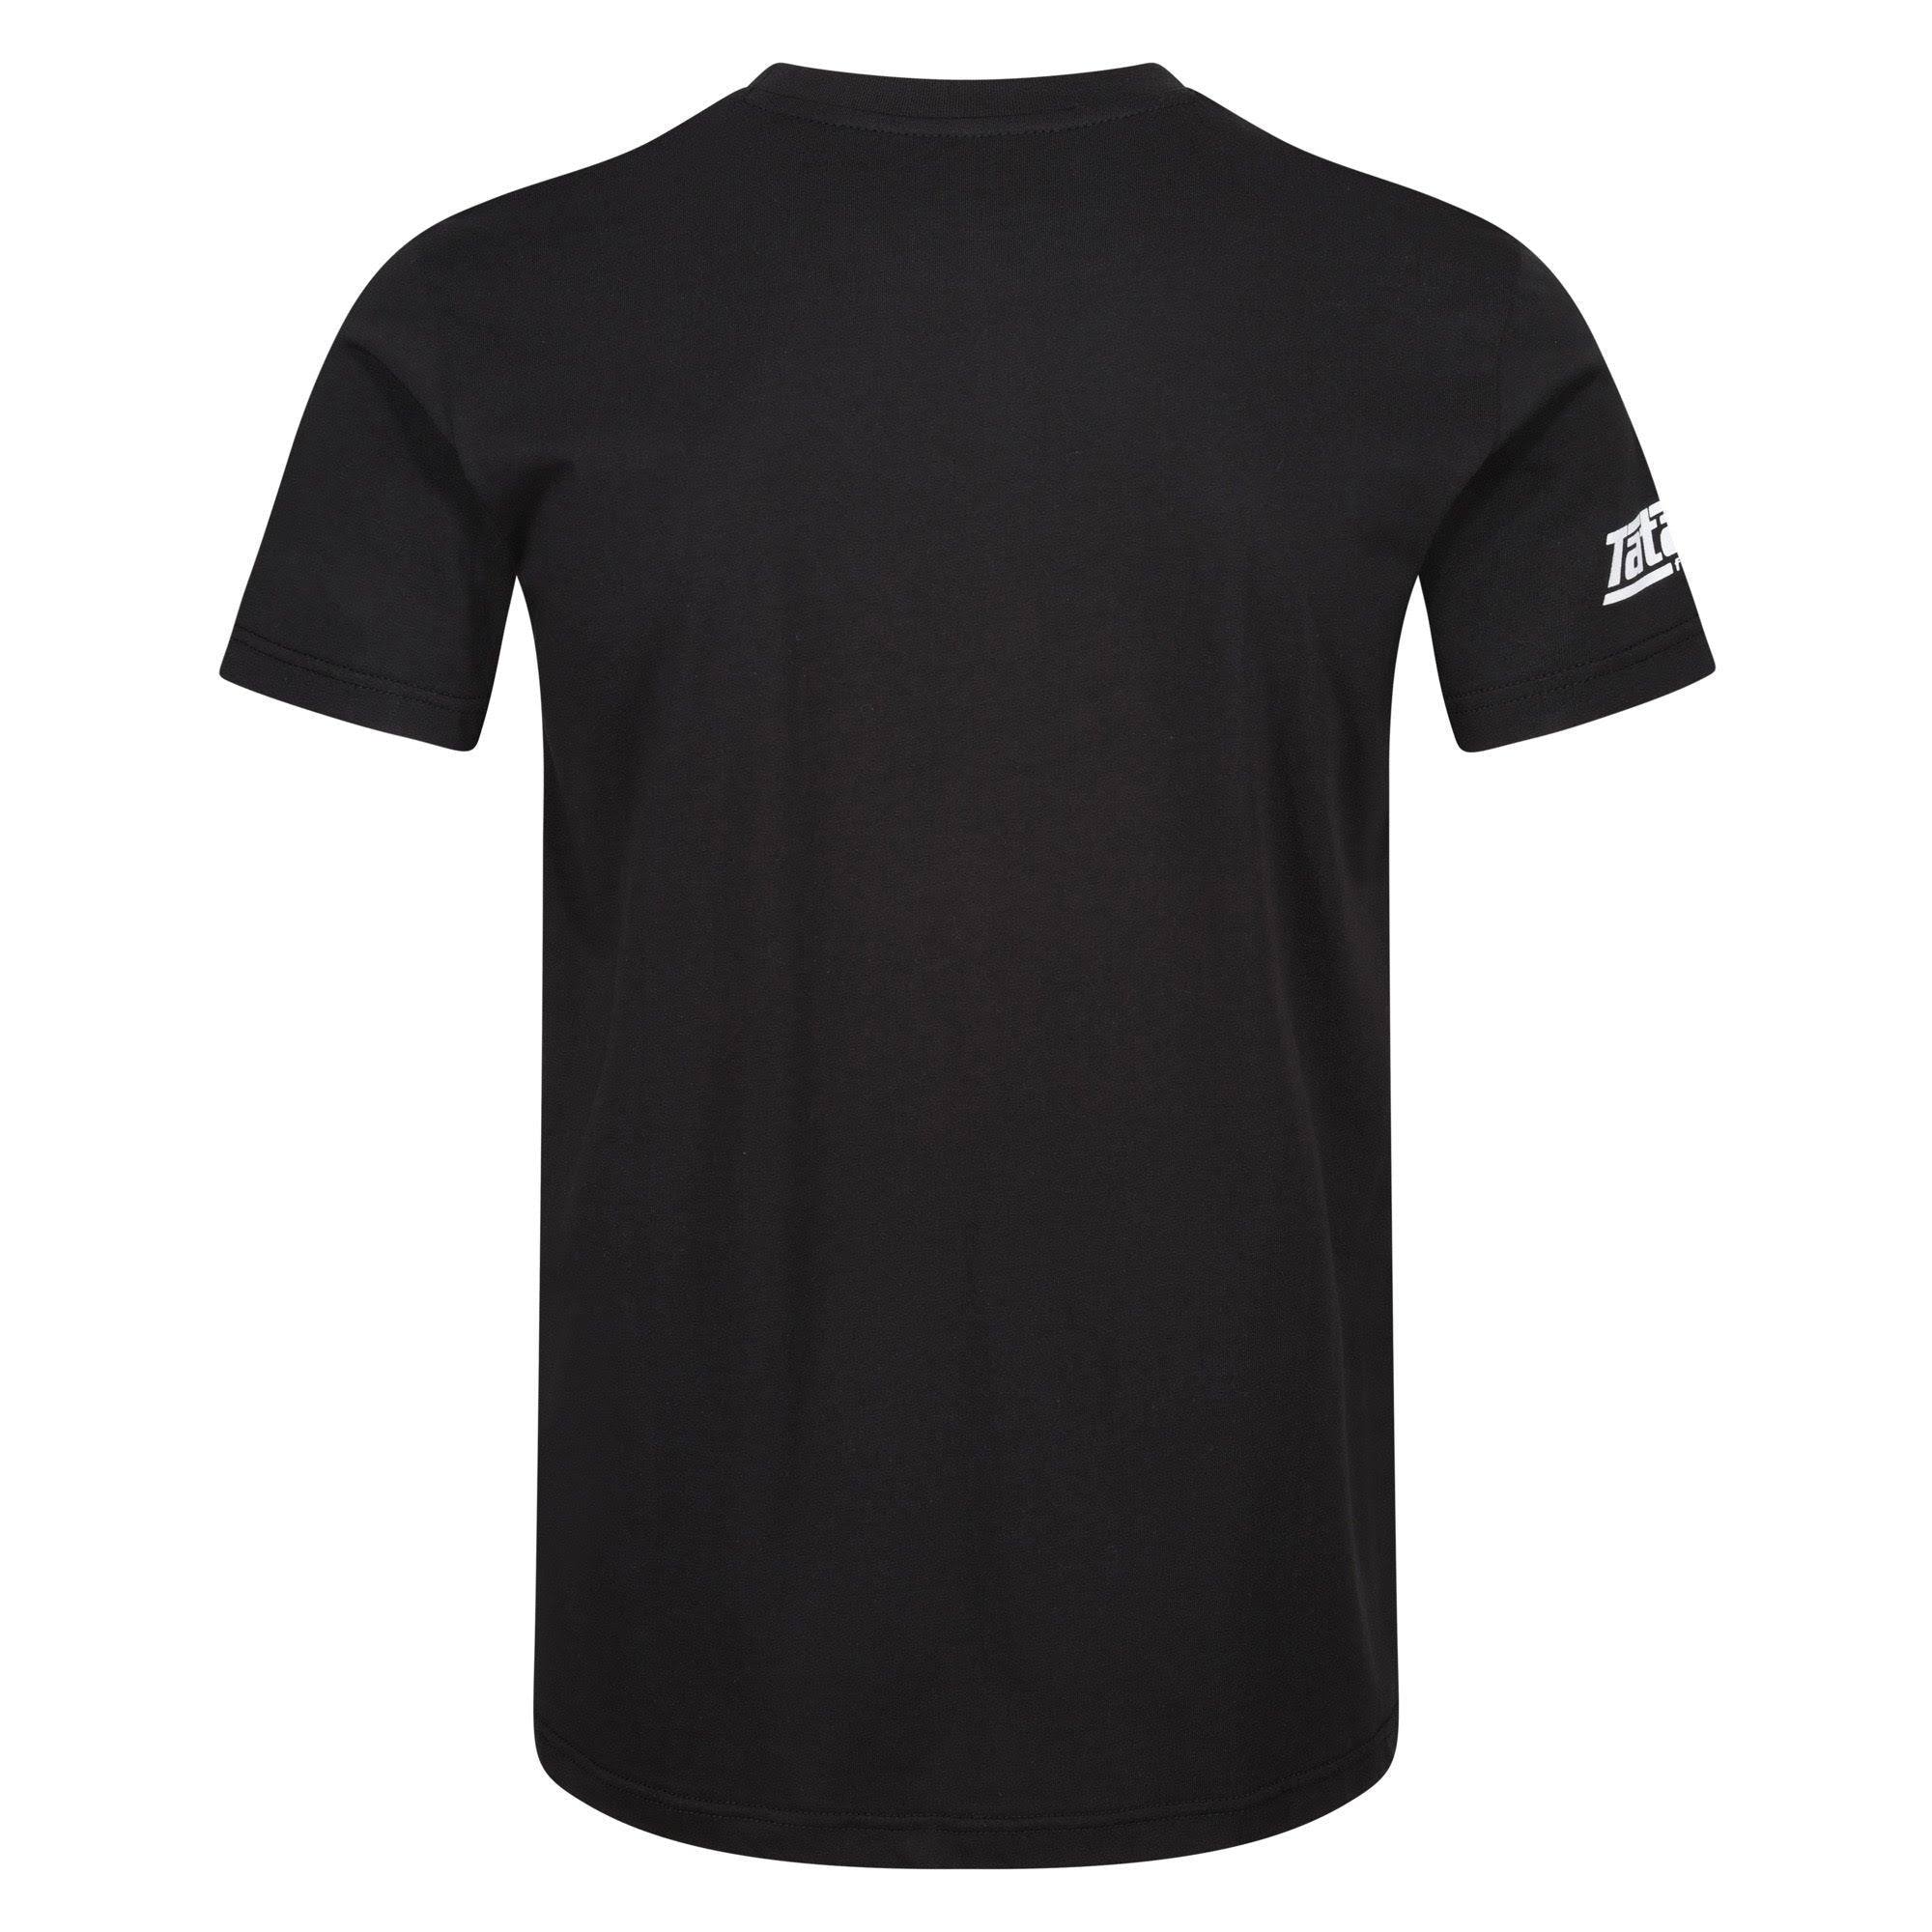 Onyx T-Shirt - Black